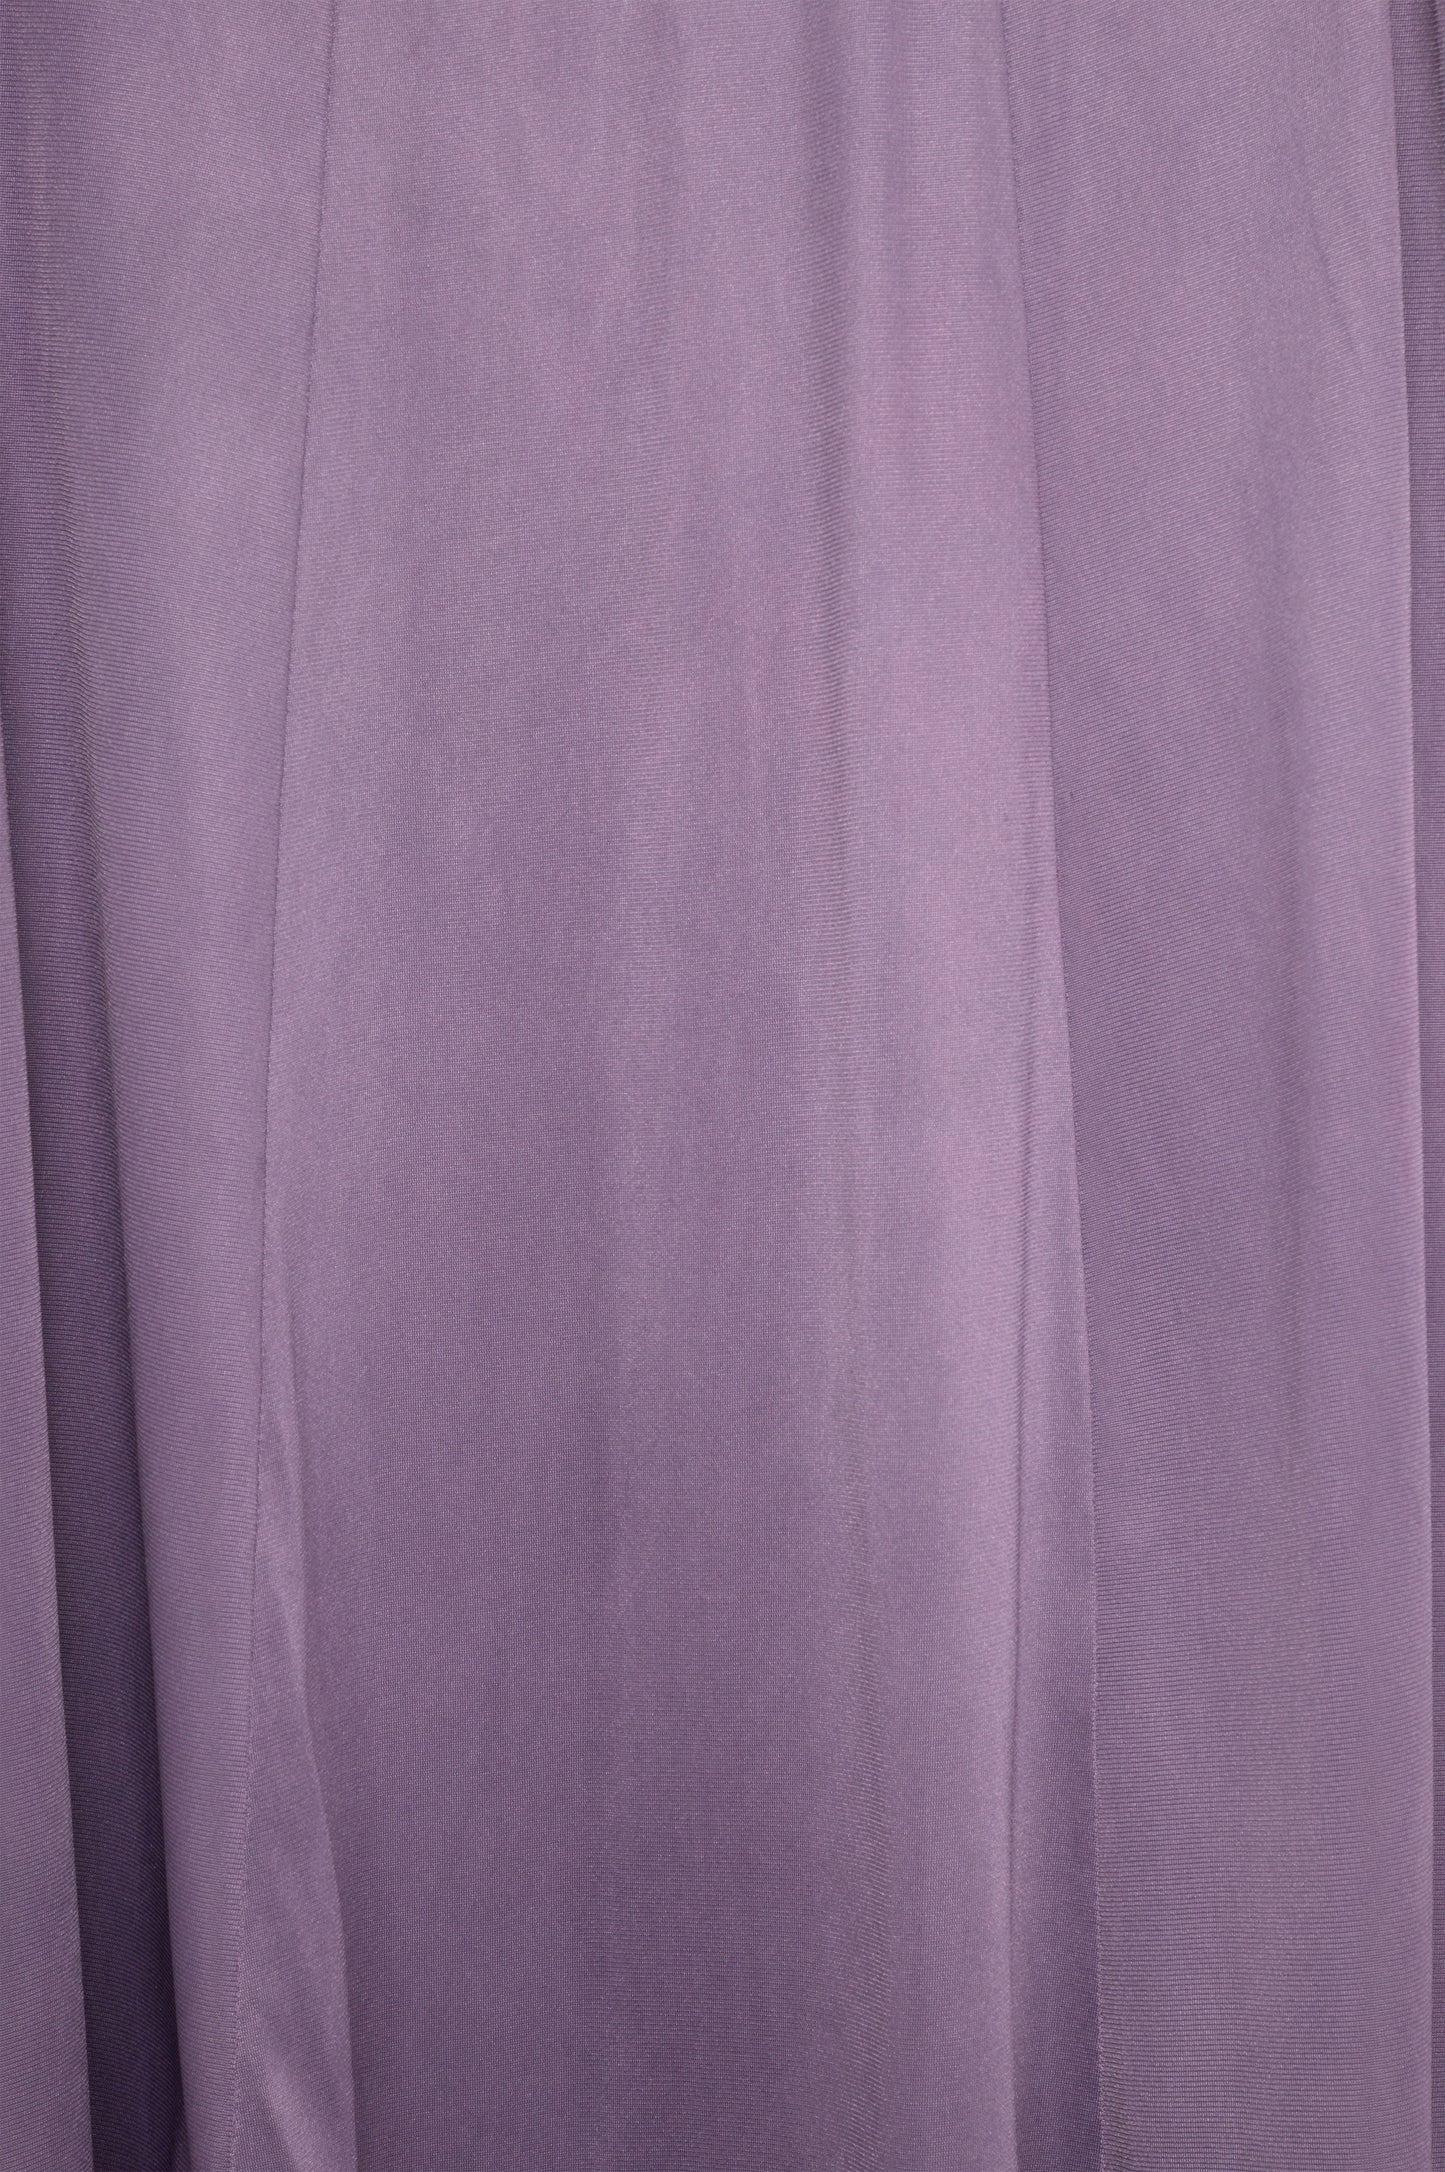 Purple Hand-Dyed Slip Skirt